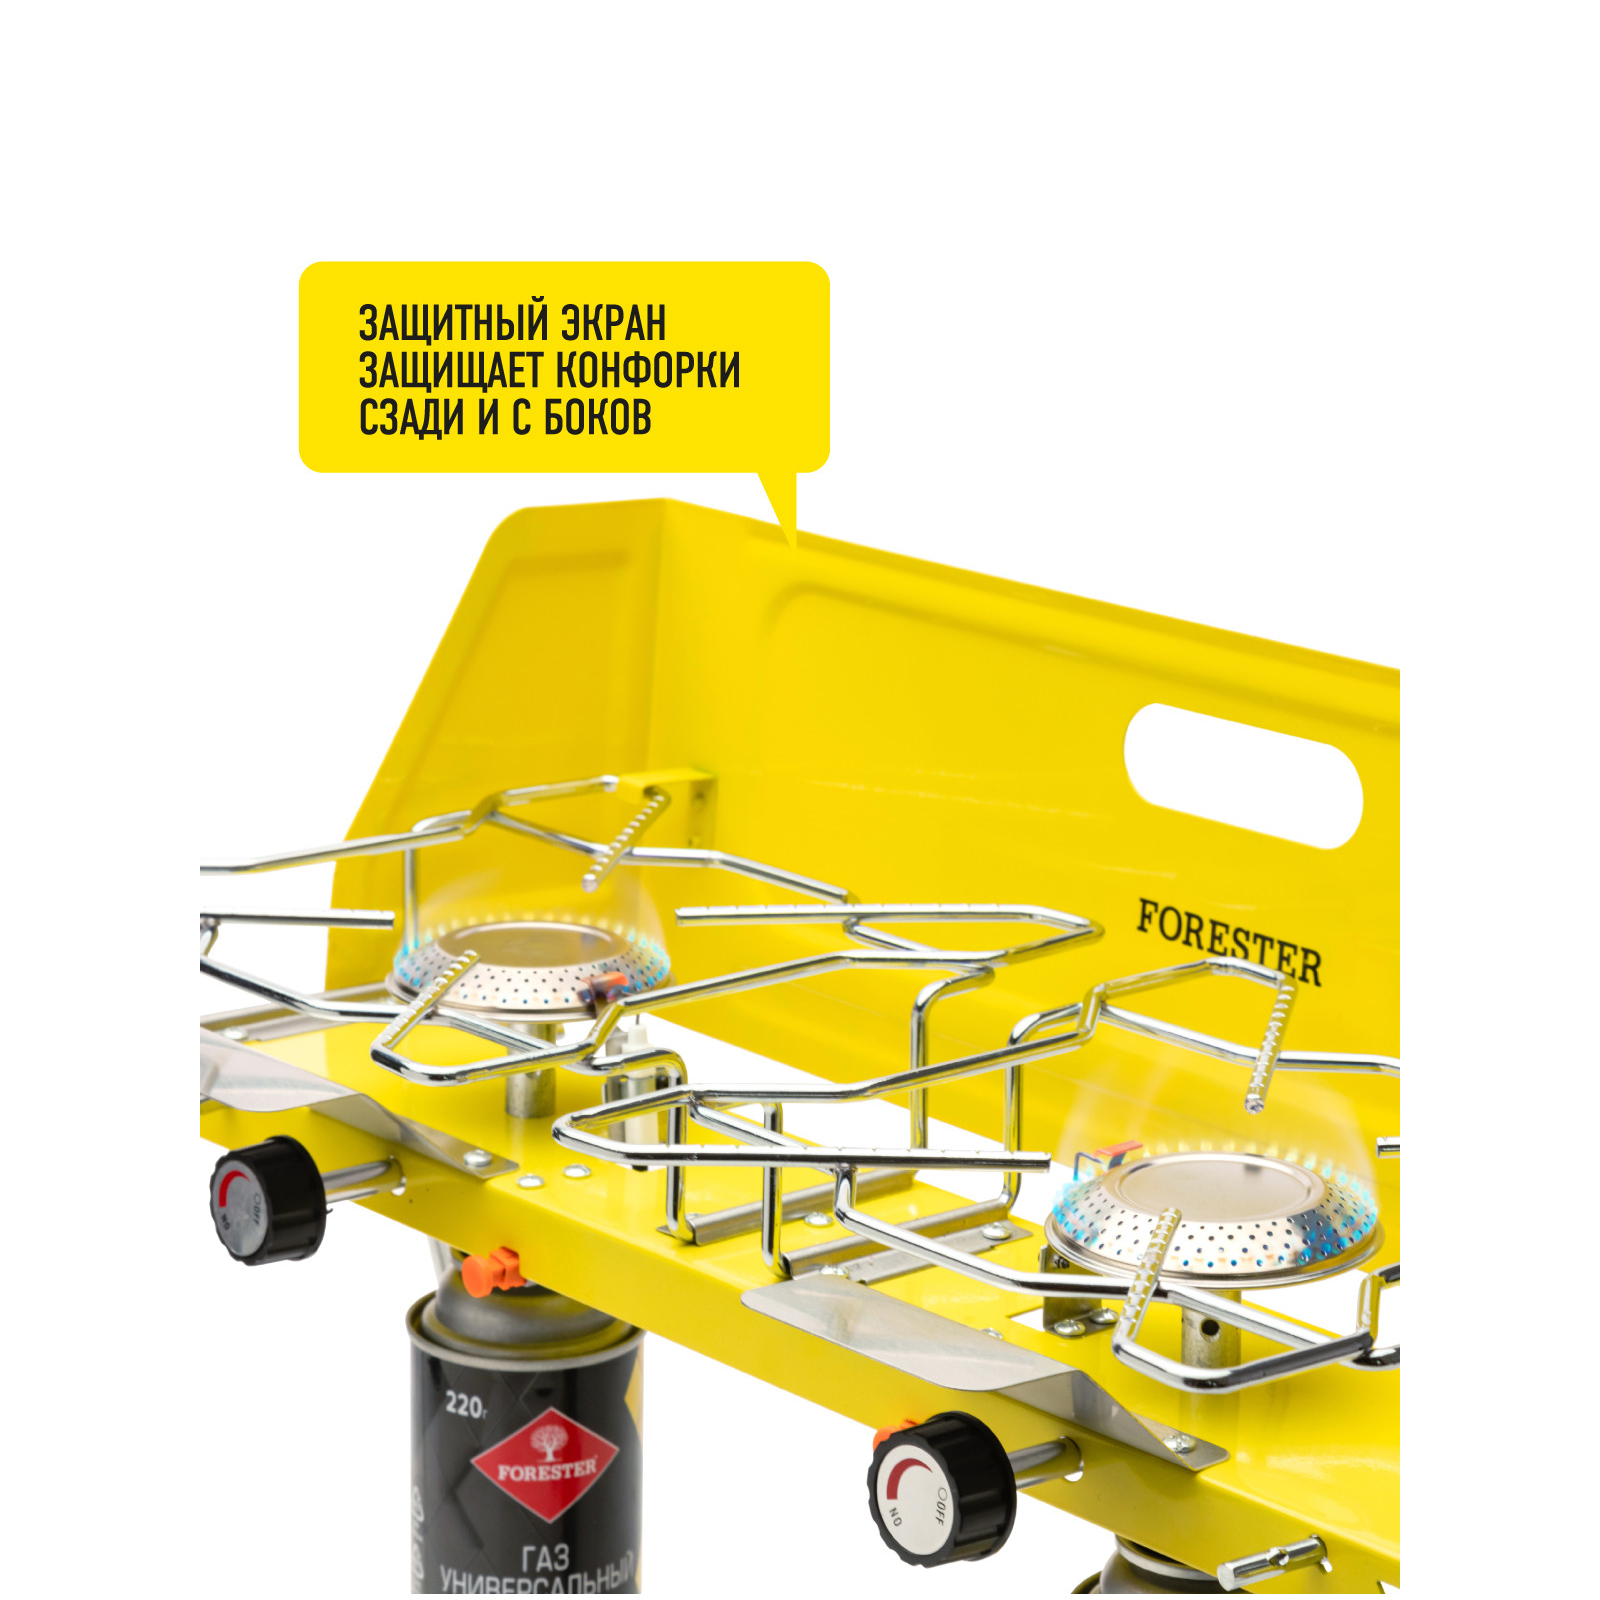 Портативная газовая плита Forester Mobile жёлтая с серебряным 50х23х40 см, цвет жёлтый - фото 4